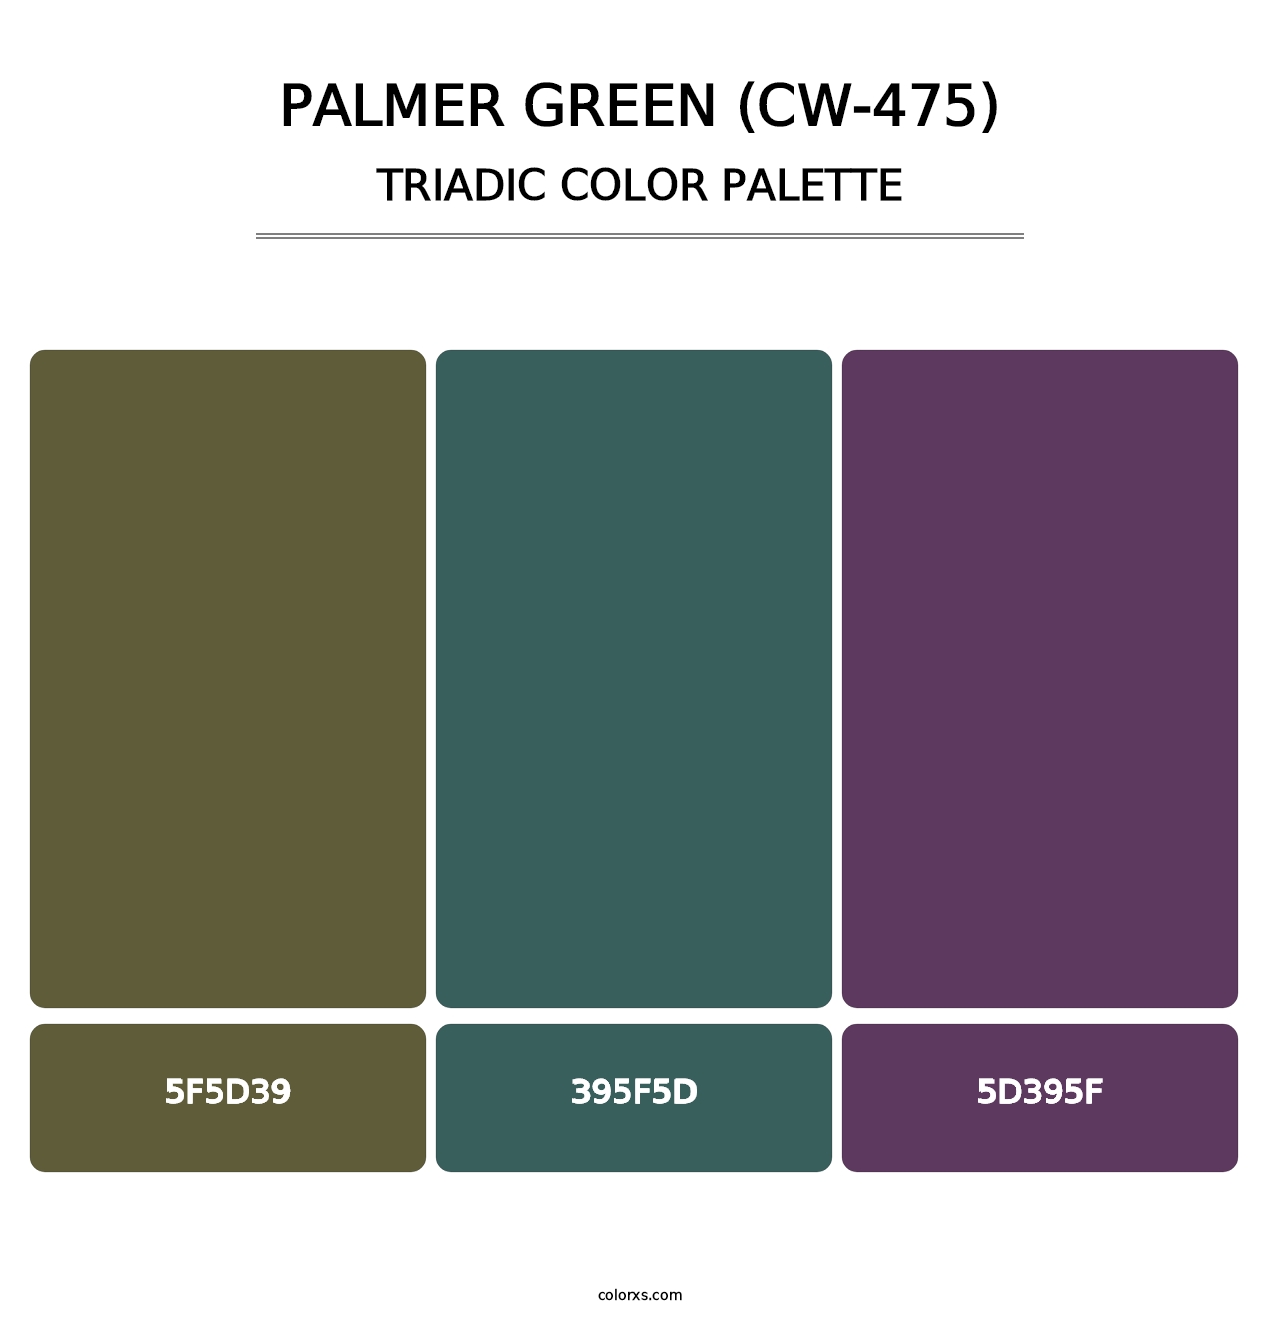 Palmer Green (CW-475) - Triadic Color Palette